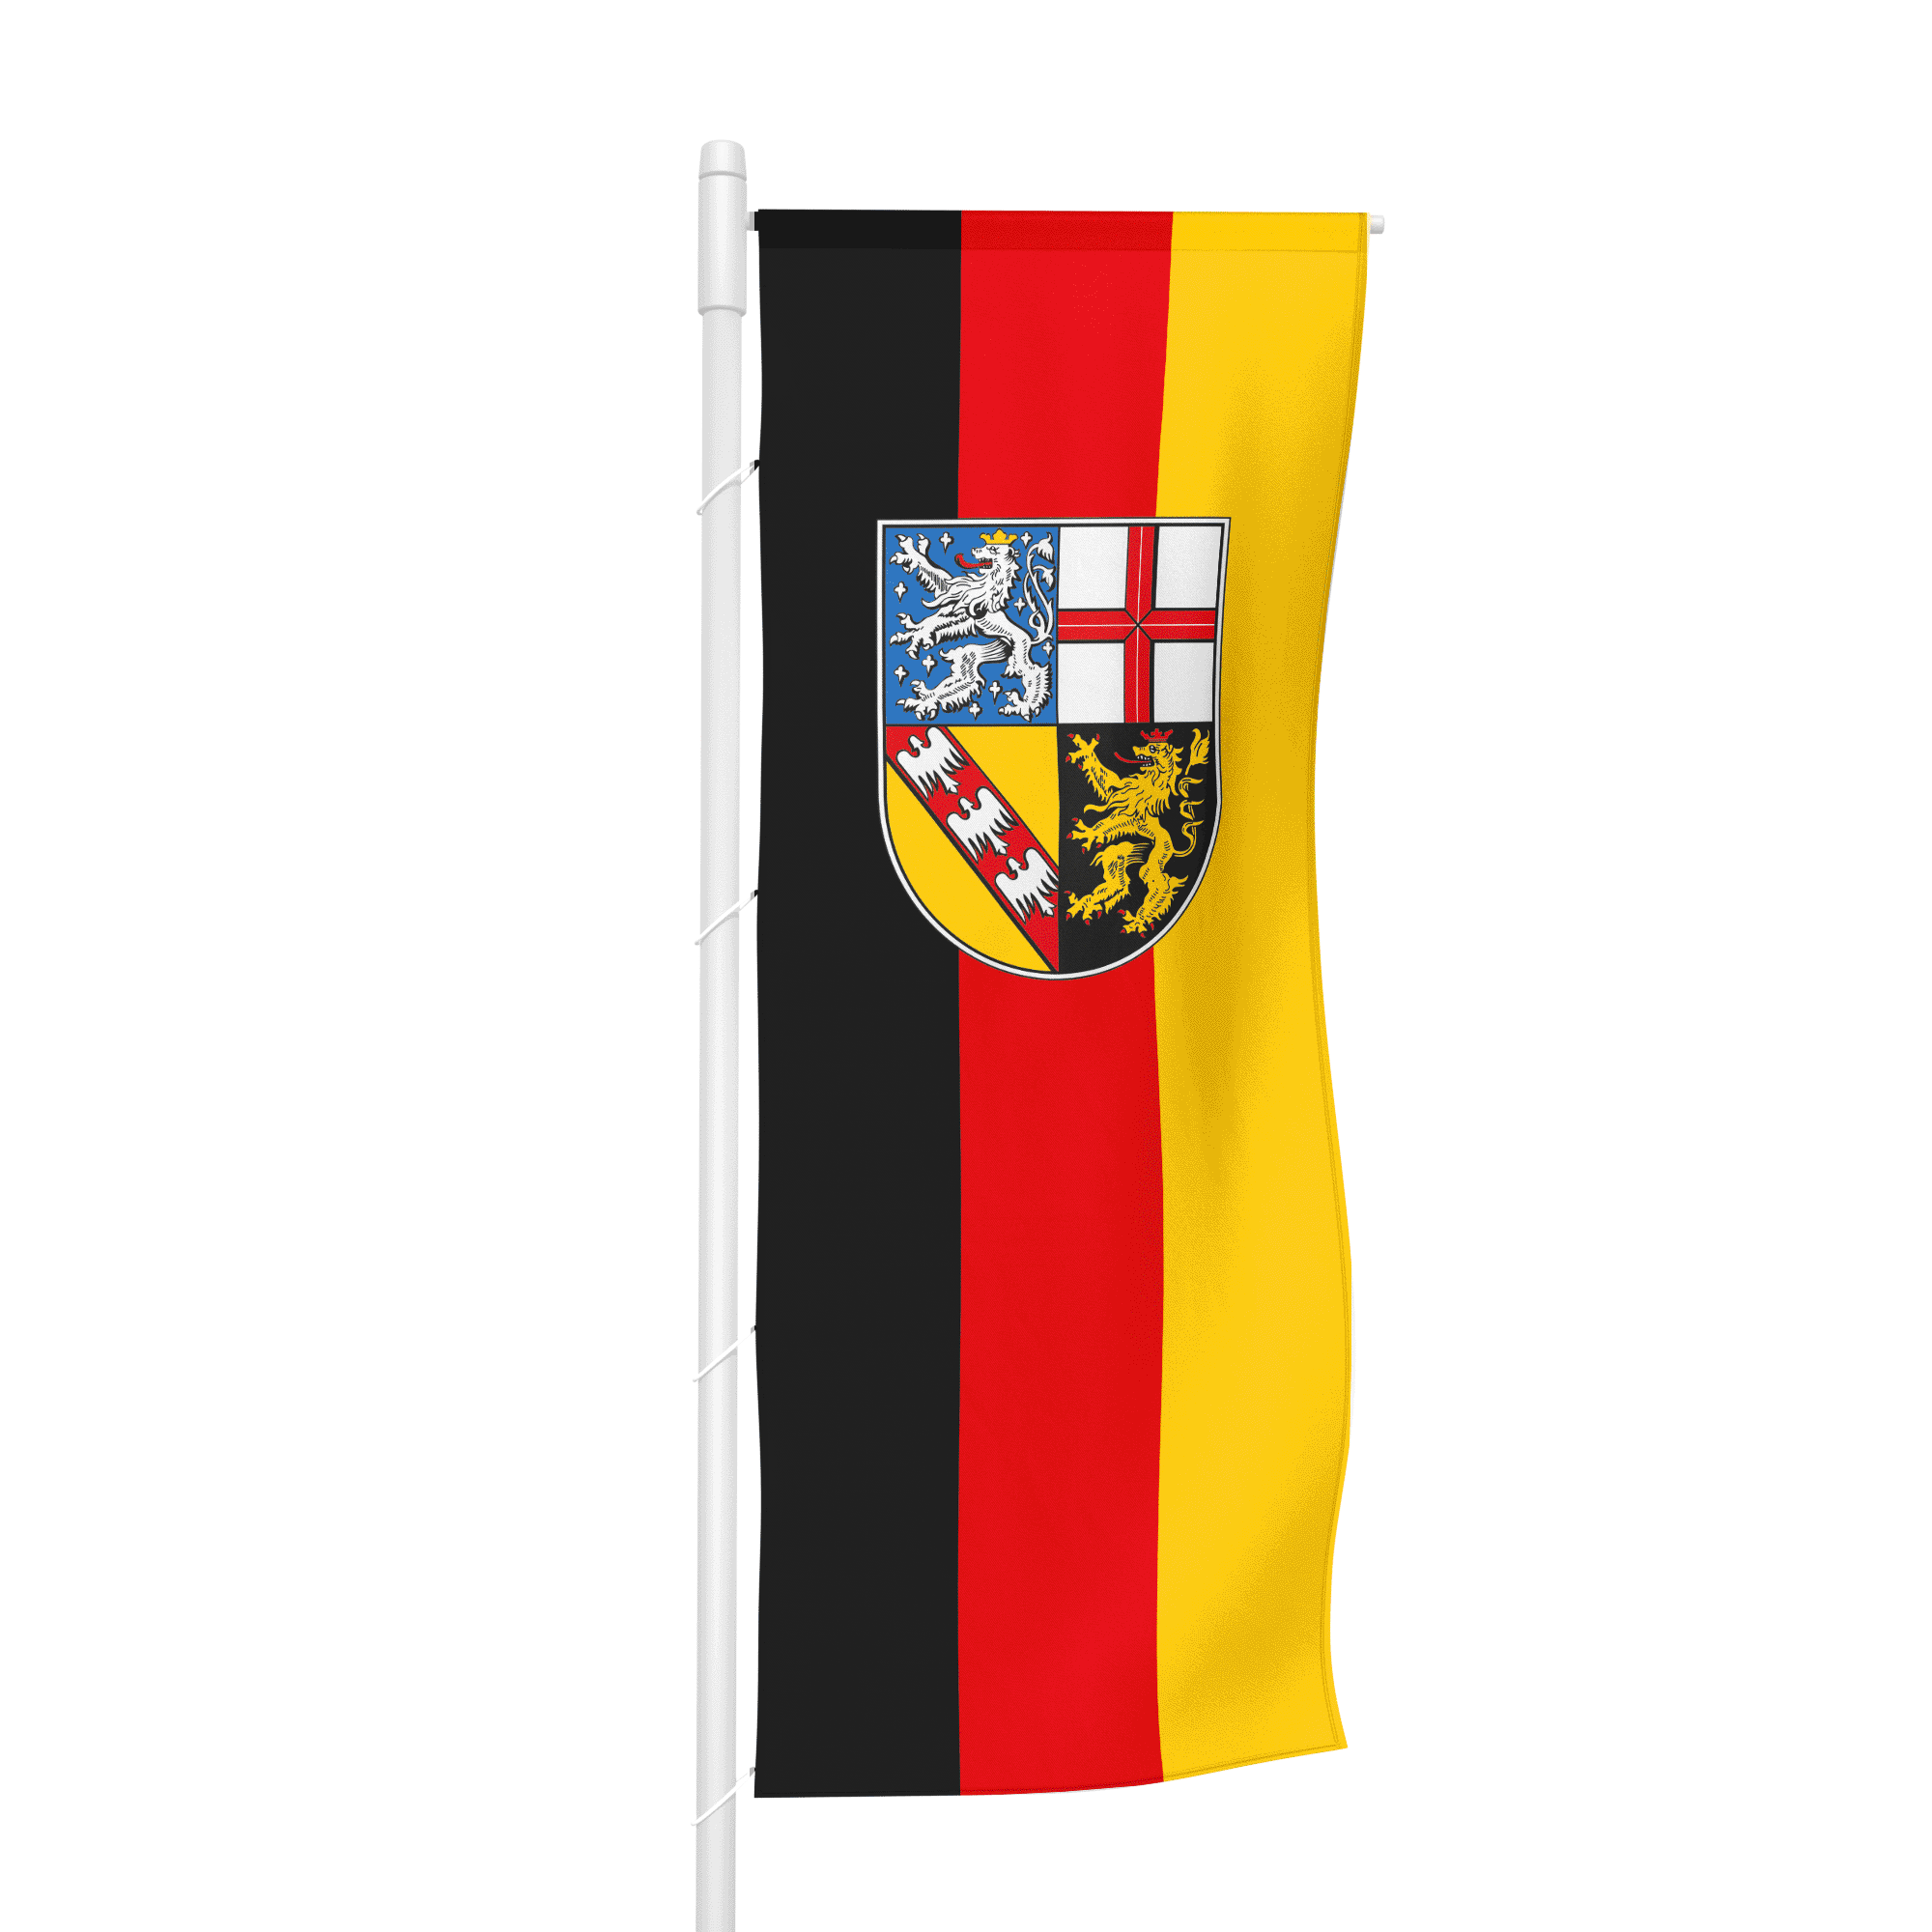 Saarland (Bürgerflagge) - Hochformatfahne